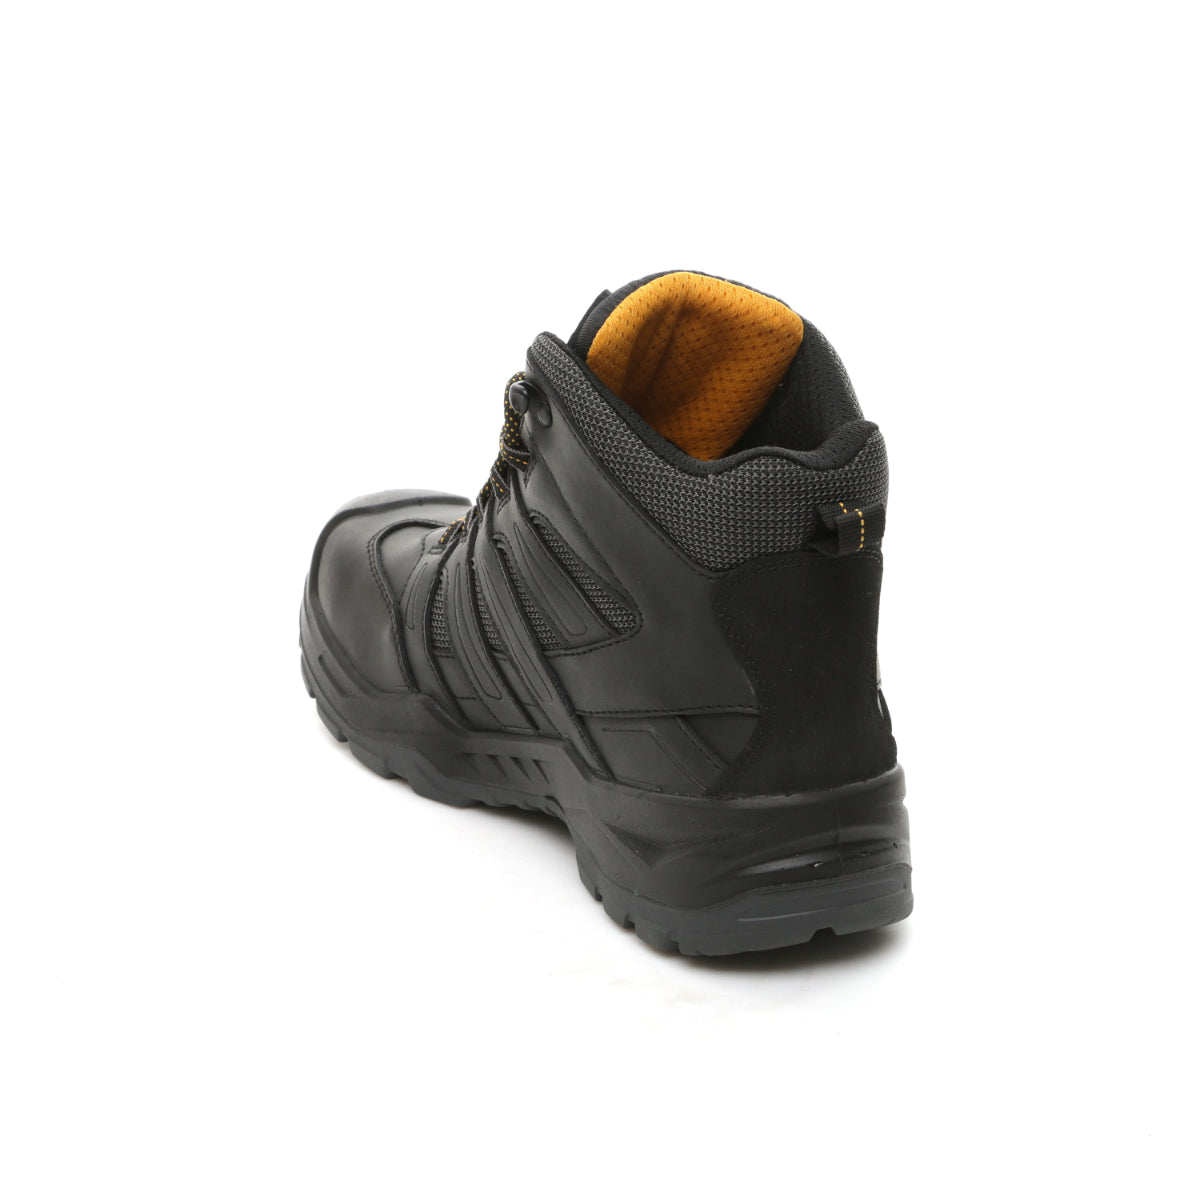 DeWalt Black Waterproof Safety Boot